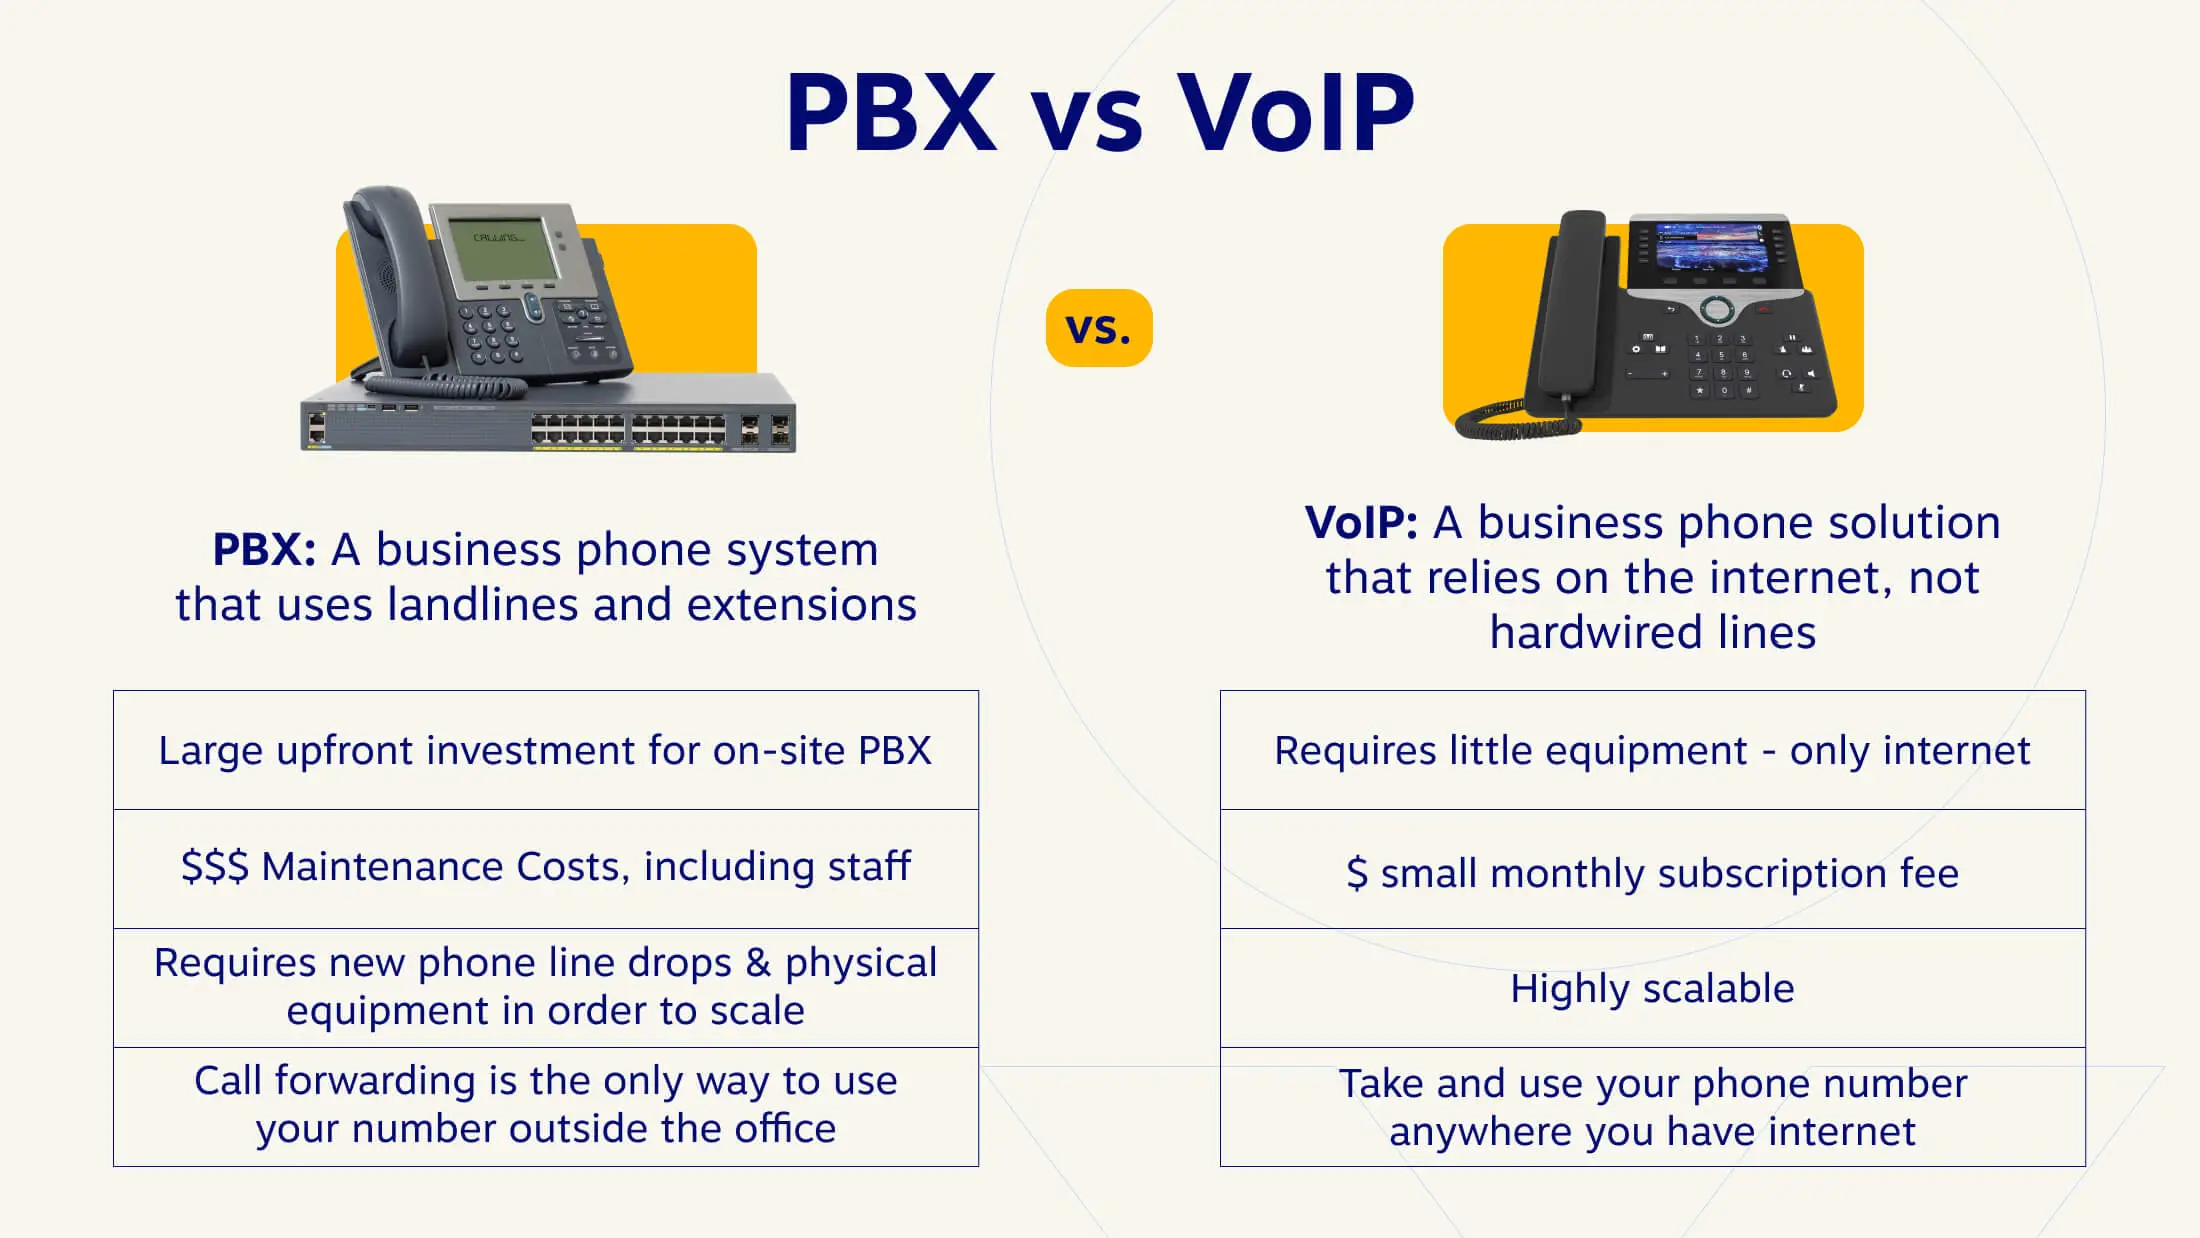 PBX VoIP 使用固定电话和分机的商务电话系统 依赖互联网而不是硬连线的商务电话解决方案 现场 PBX 的大量前期投资 需要很少的设备 - 仅互联网 $$$ 维护成本，包括员工 $ 每月少量订阅费用 需要新的电话线路和物理设备才能扩展 高度可扩展 呼叫转移是在办公室外使用您的号码的唯一方法 在有互联网的任何地方都可以使用您的电话号码